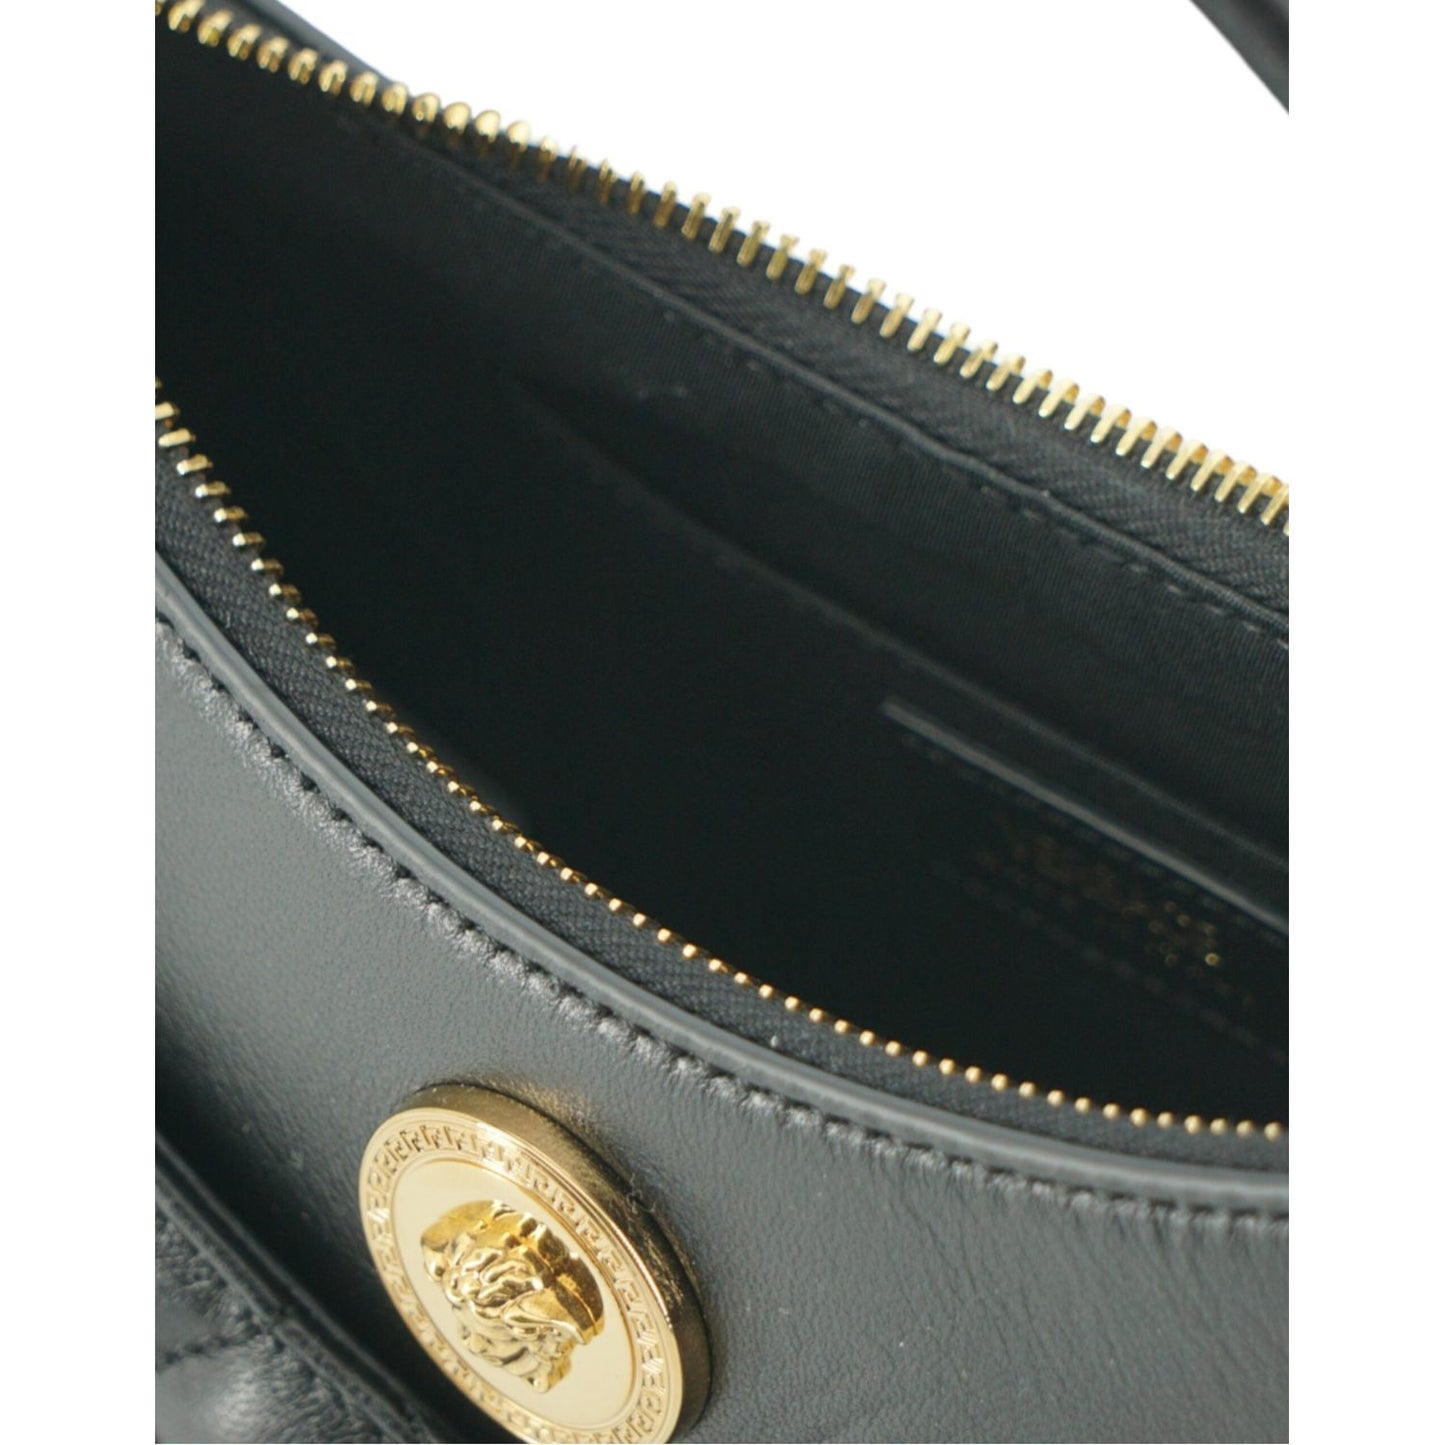 Versace Black Leather Half Moon Shoulder Bag black-leather-half-moon-shoulder-bag DSC01187-scaled-02580631-3bb.jpg